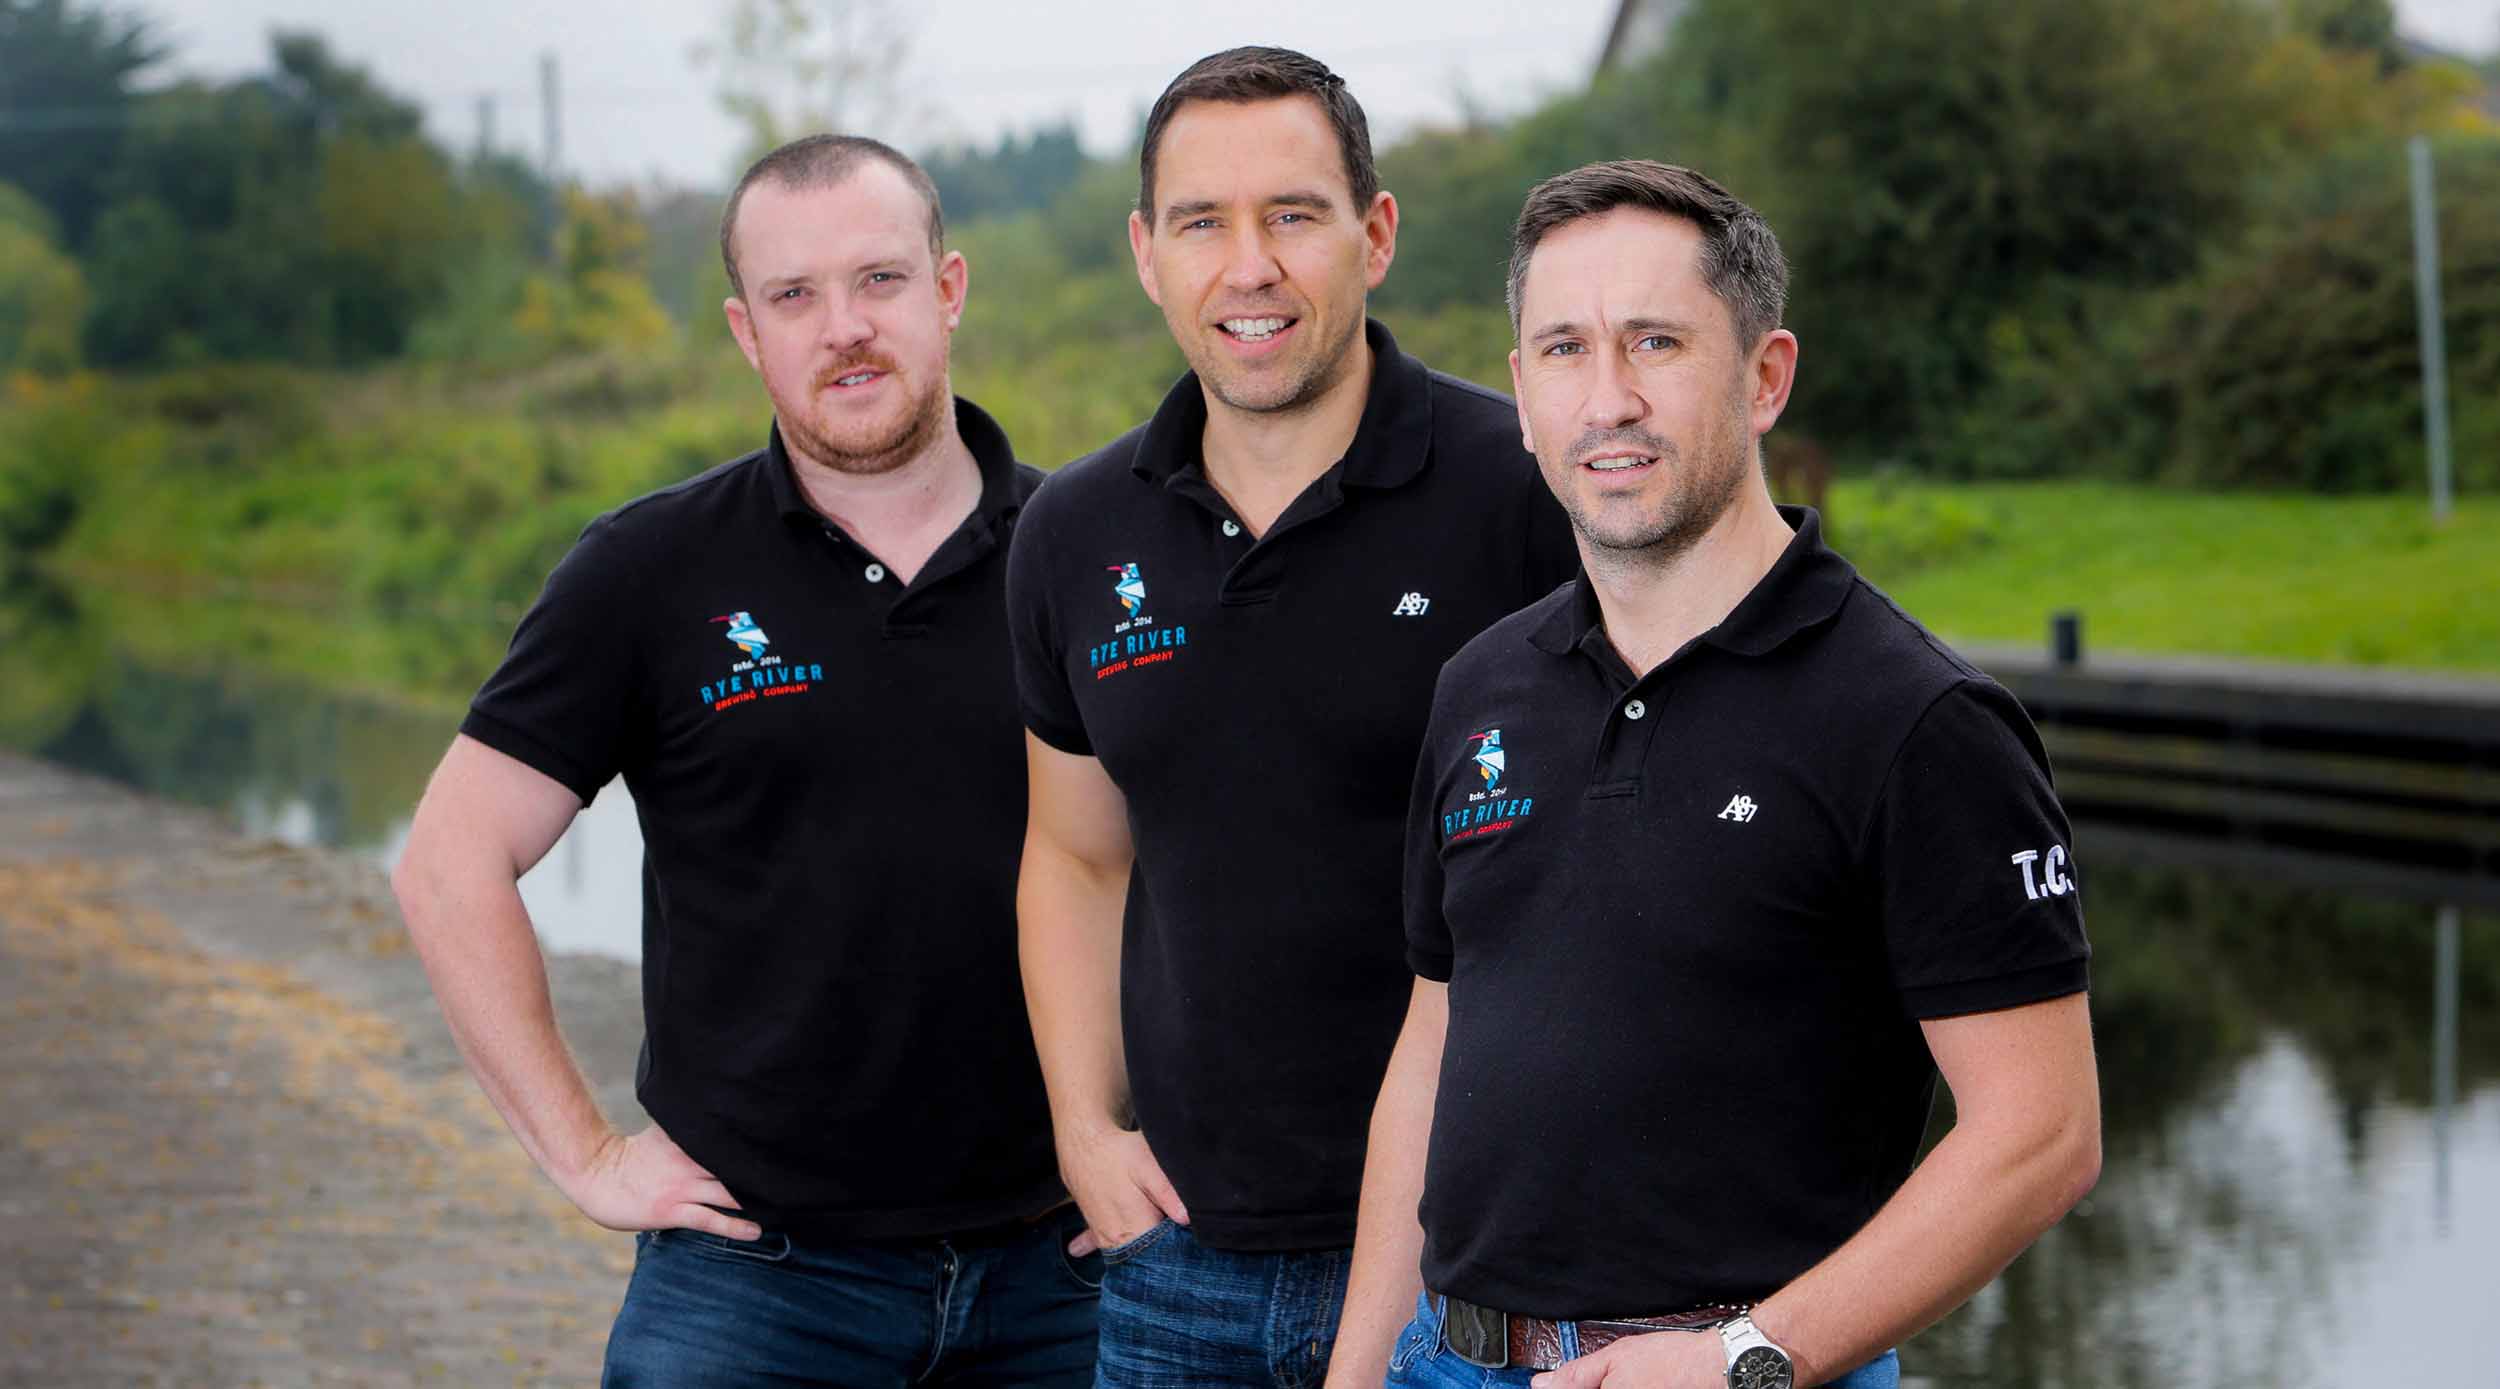 The Rye River Brewing Company winners (from left): Alan Wolfe, Niall Phelan, Tom Cronin.